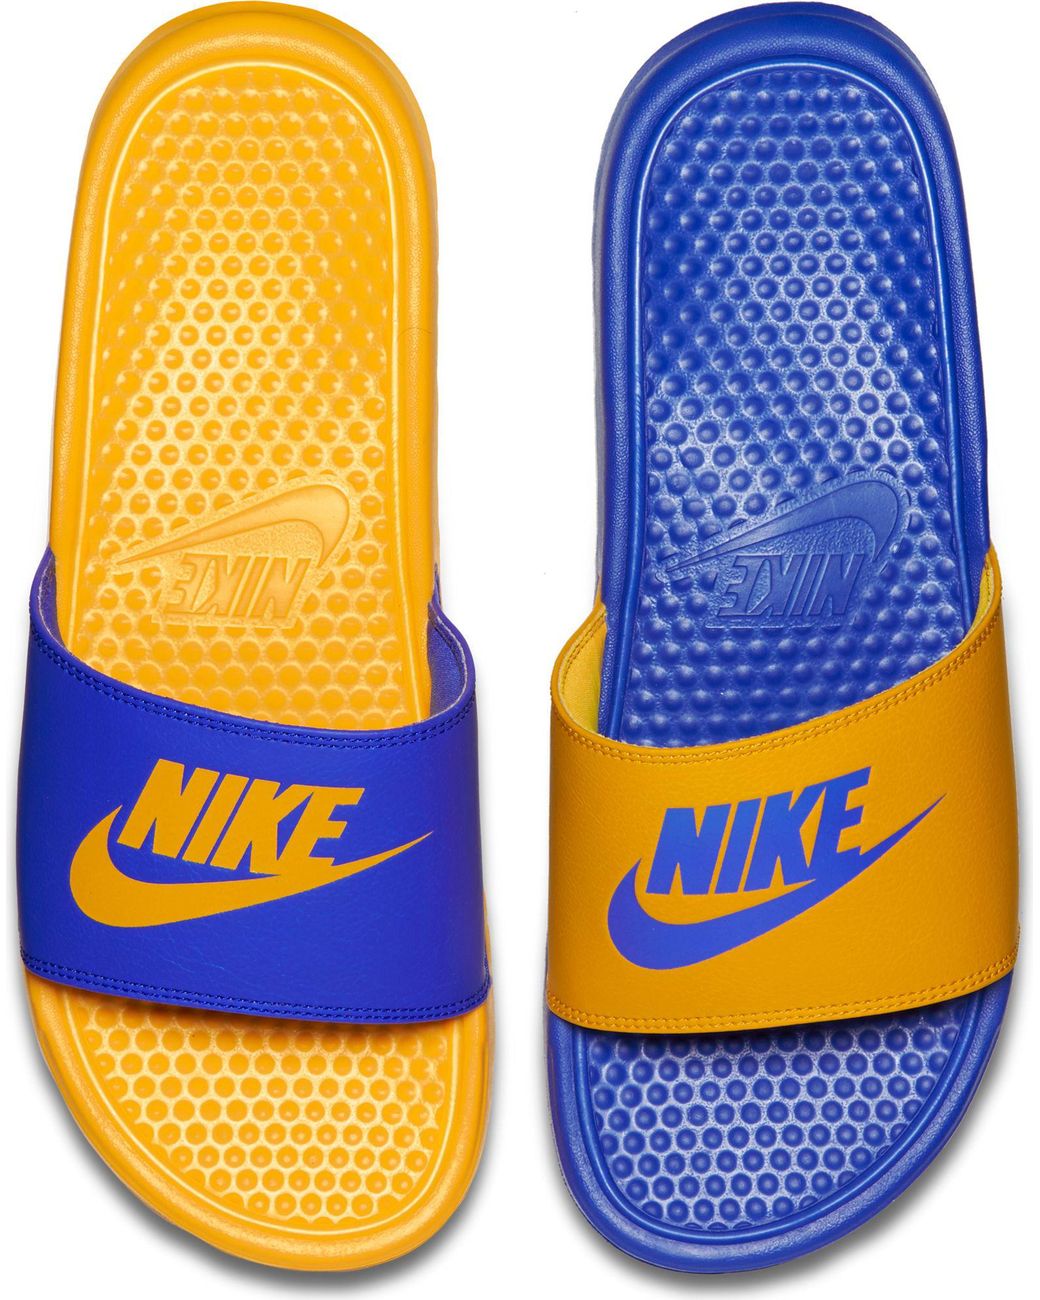 Nike Synthetic Enassi Just Do It Mismatch Slides in Blue/Orange (Blue) |  Lyst